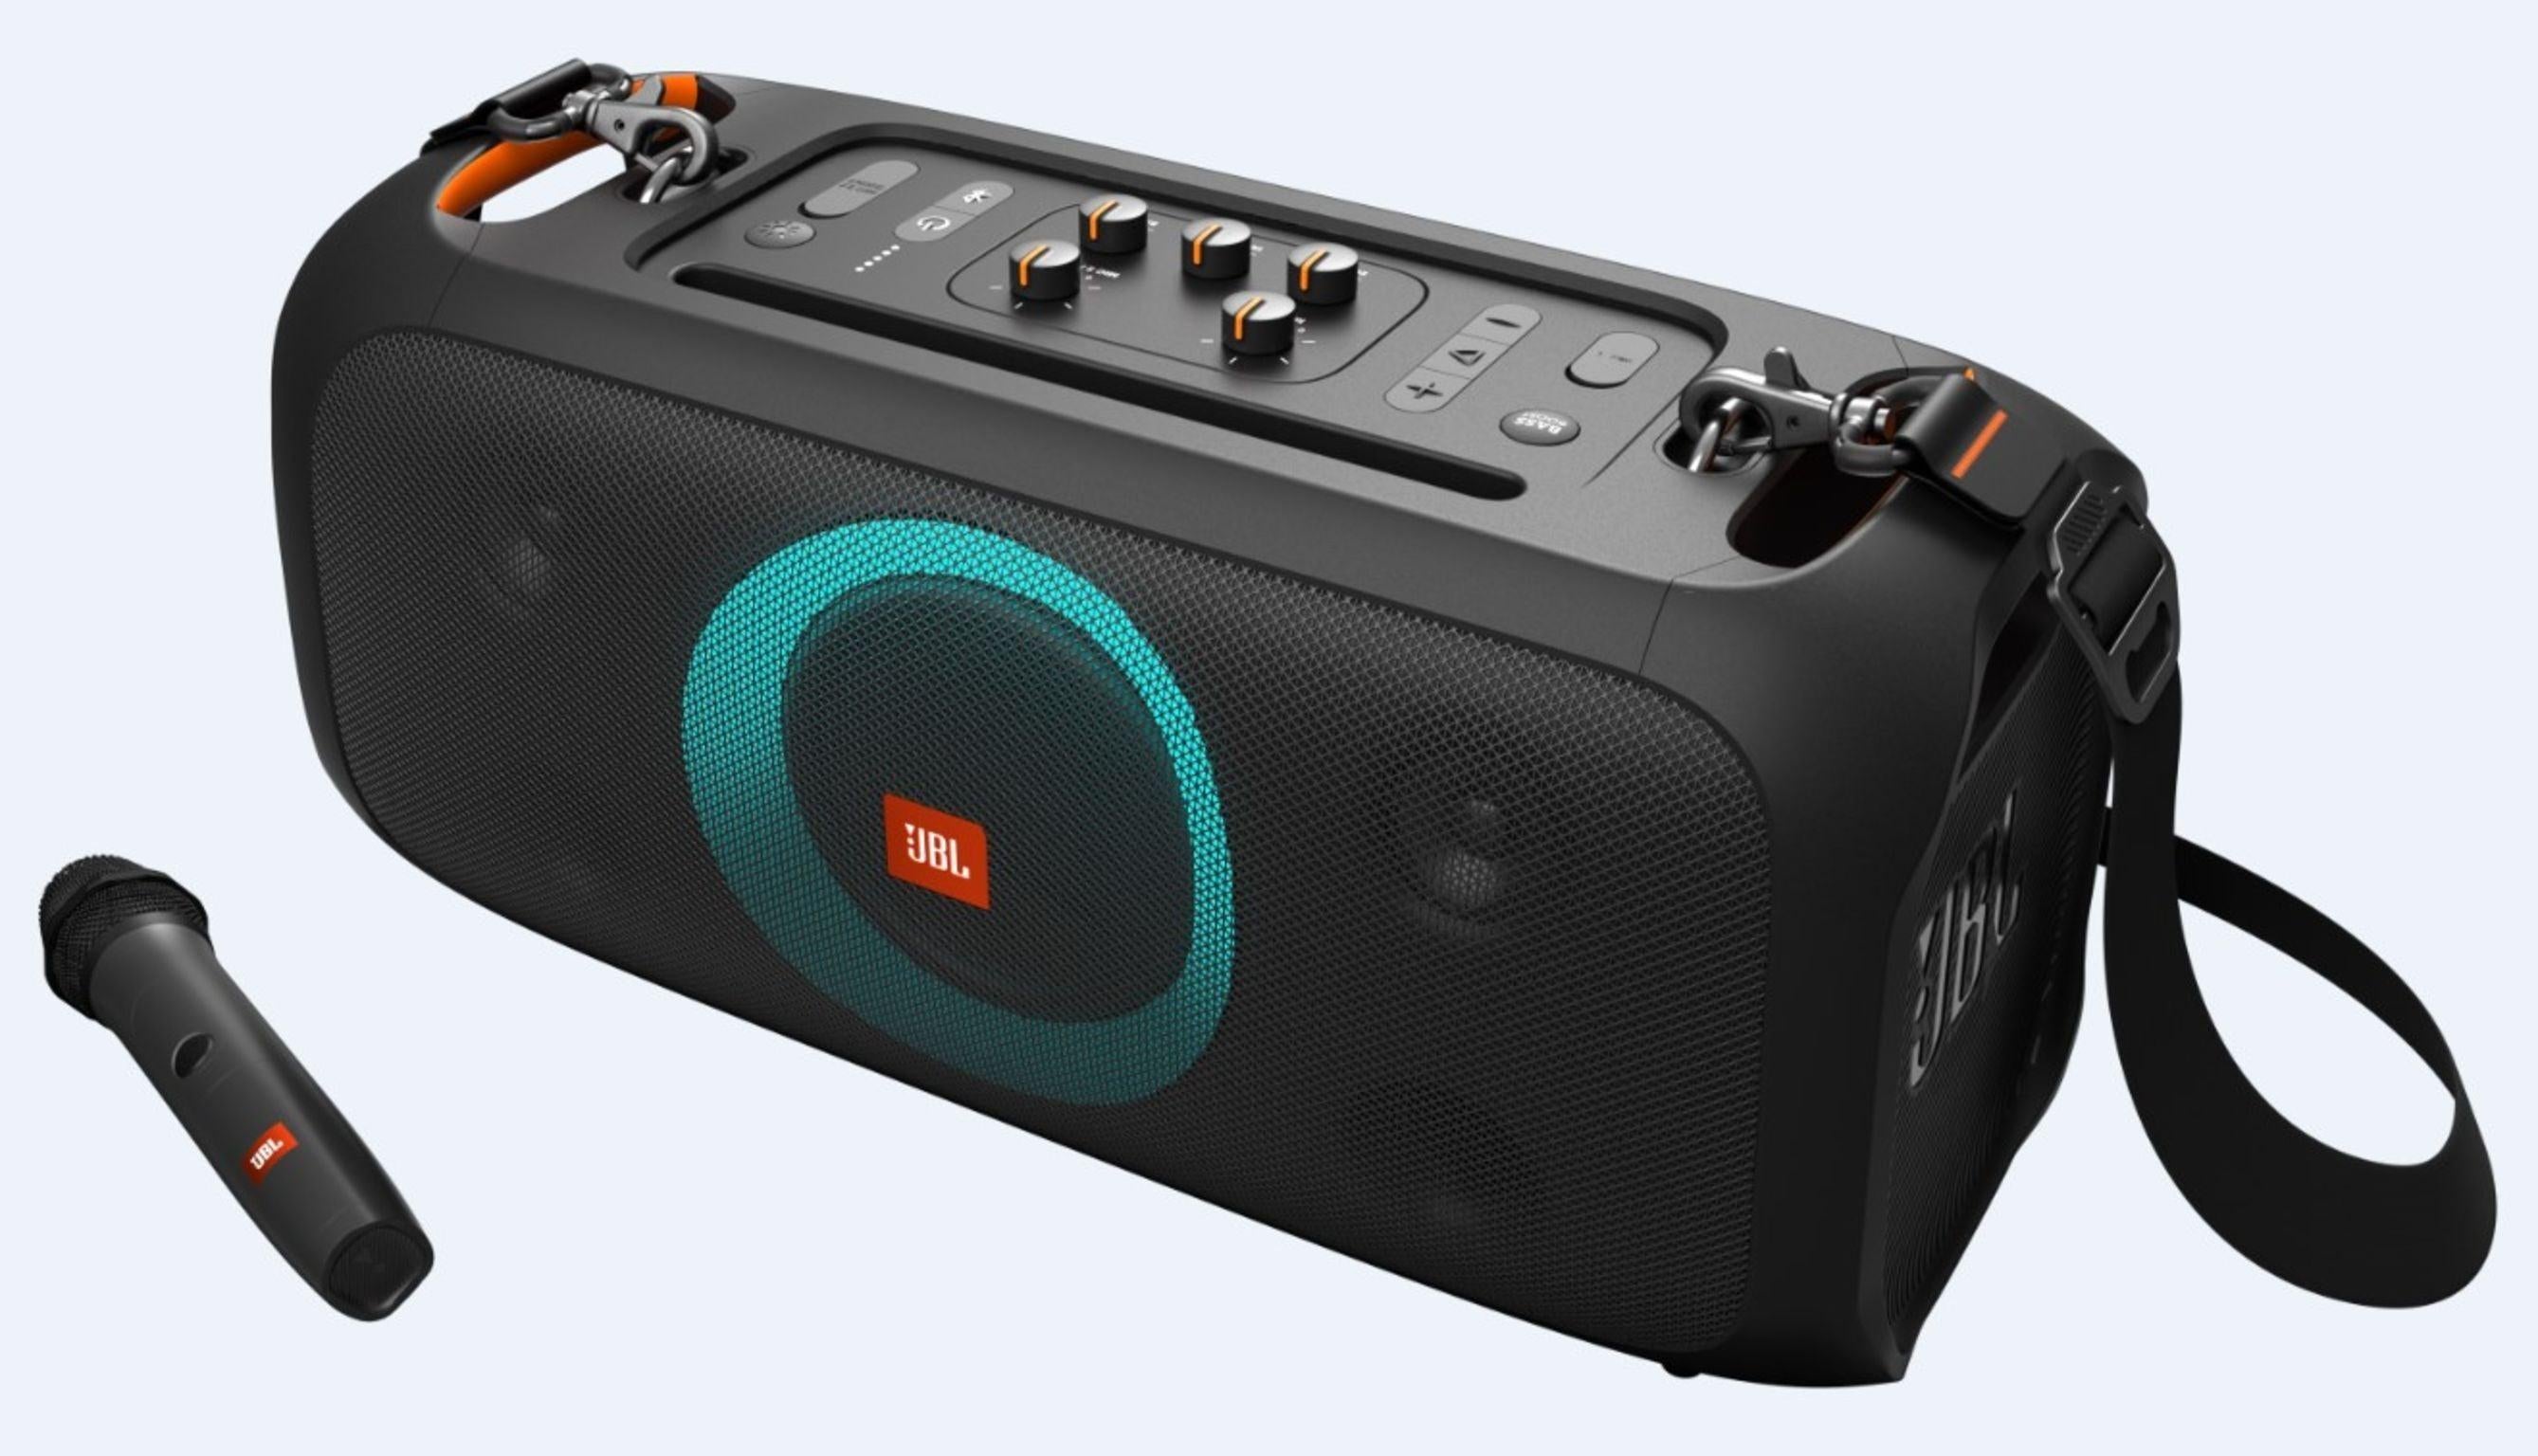 JBL PartyBox On The Go Portable Bluetooth Karaoke Speaker - Mainz Empire Pte Ltd